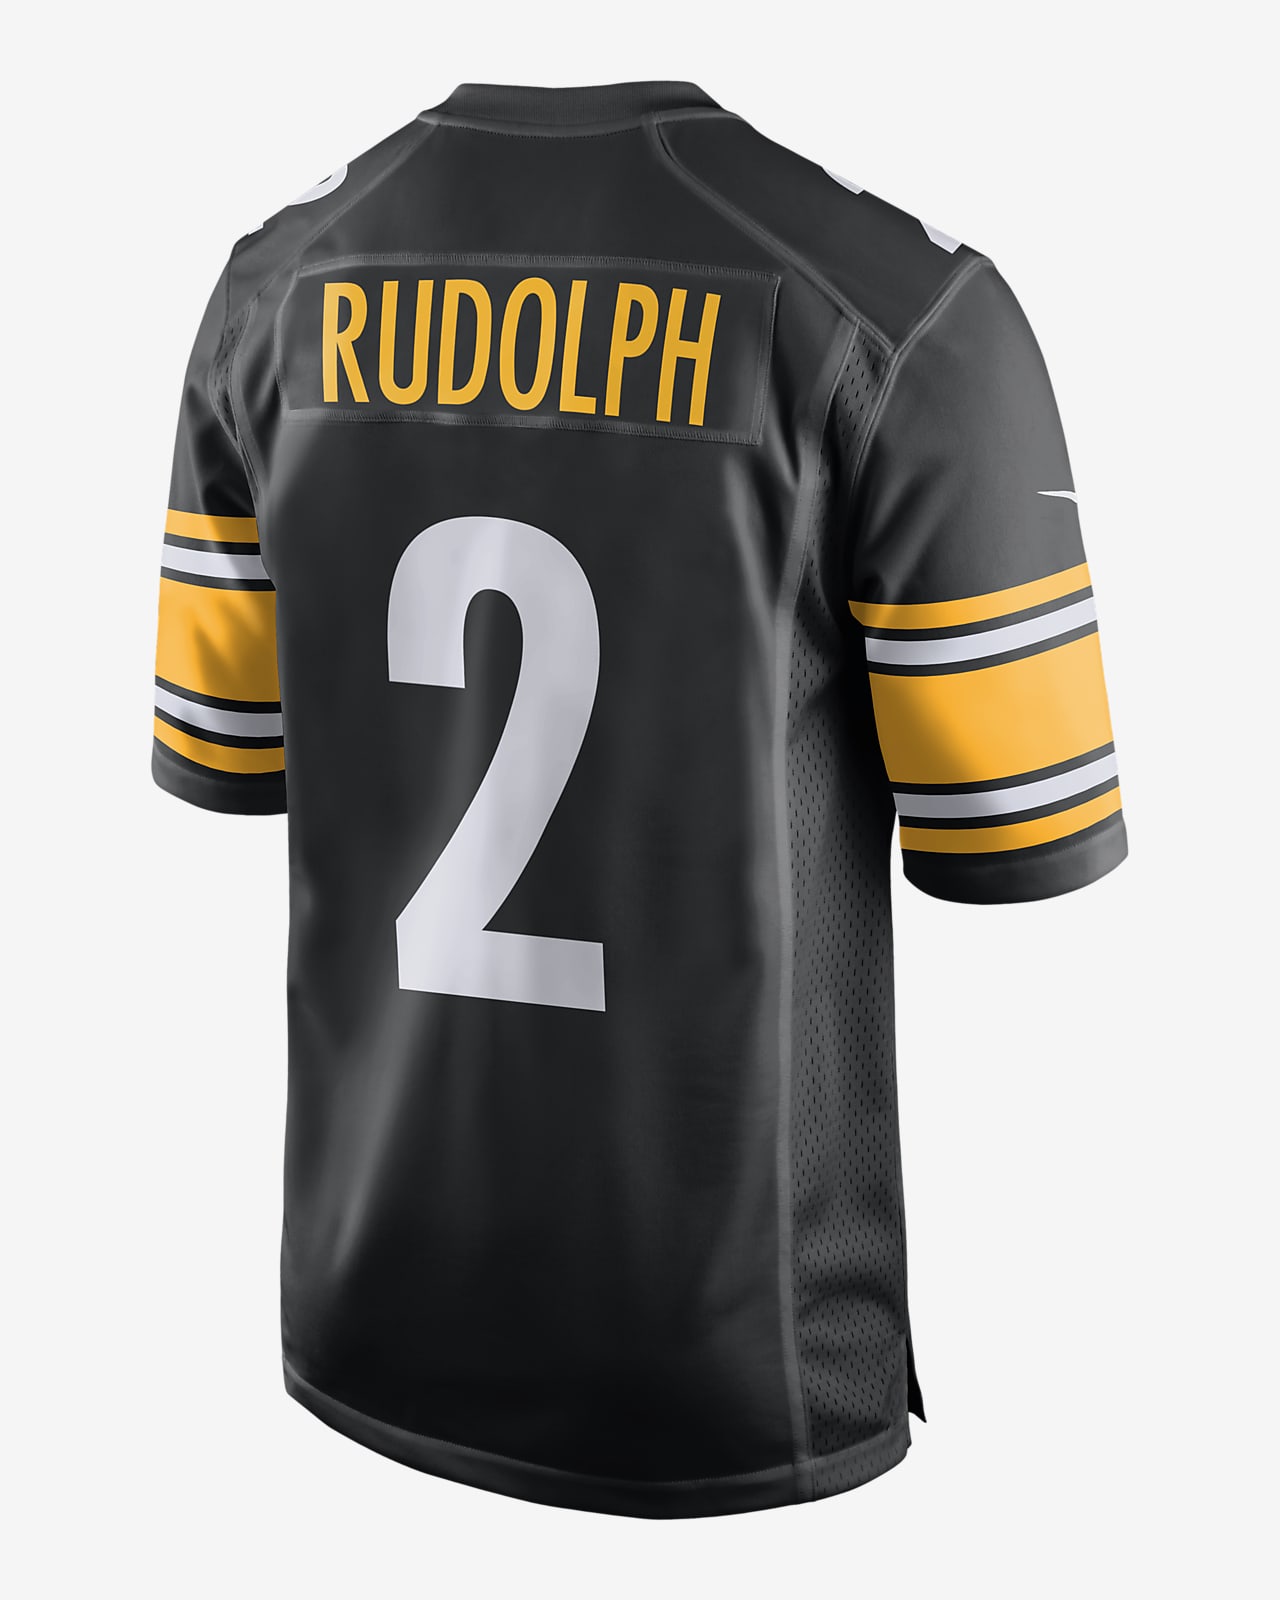 rudolph steelers jersey